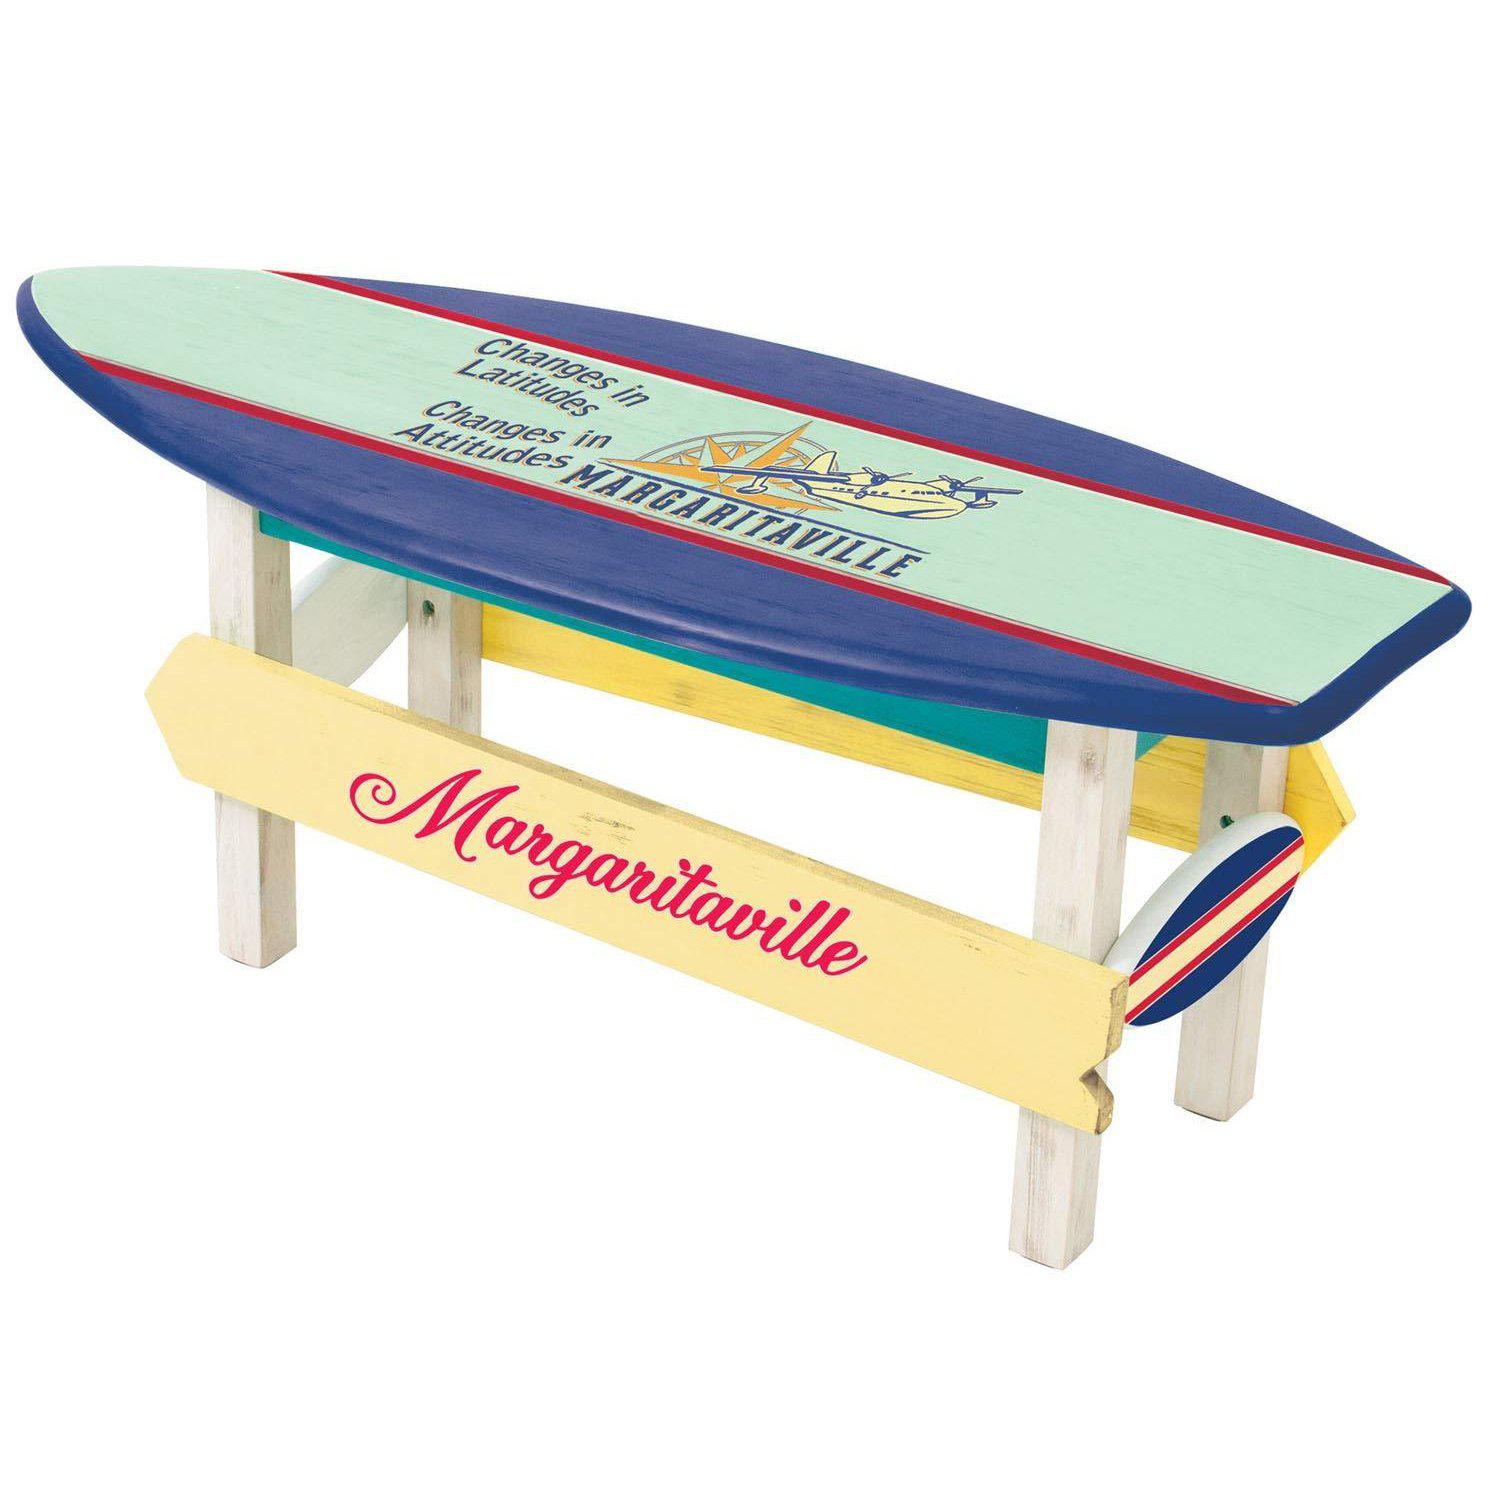 Margaritaville W630274 Changes in Attitude Sea Plane Coffee Table